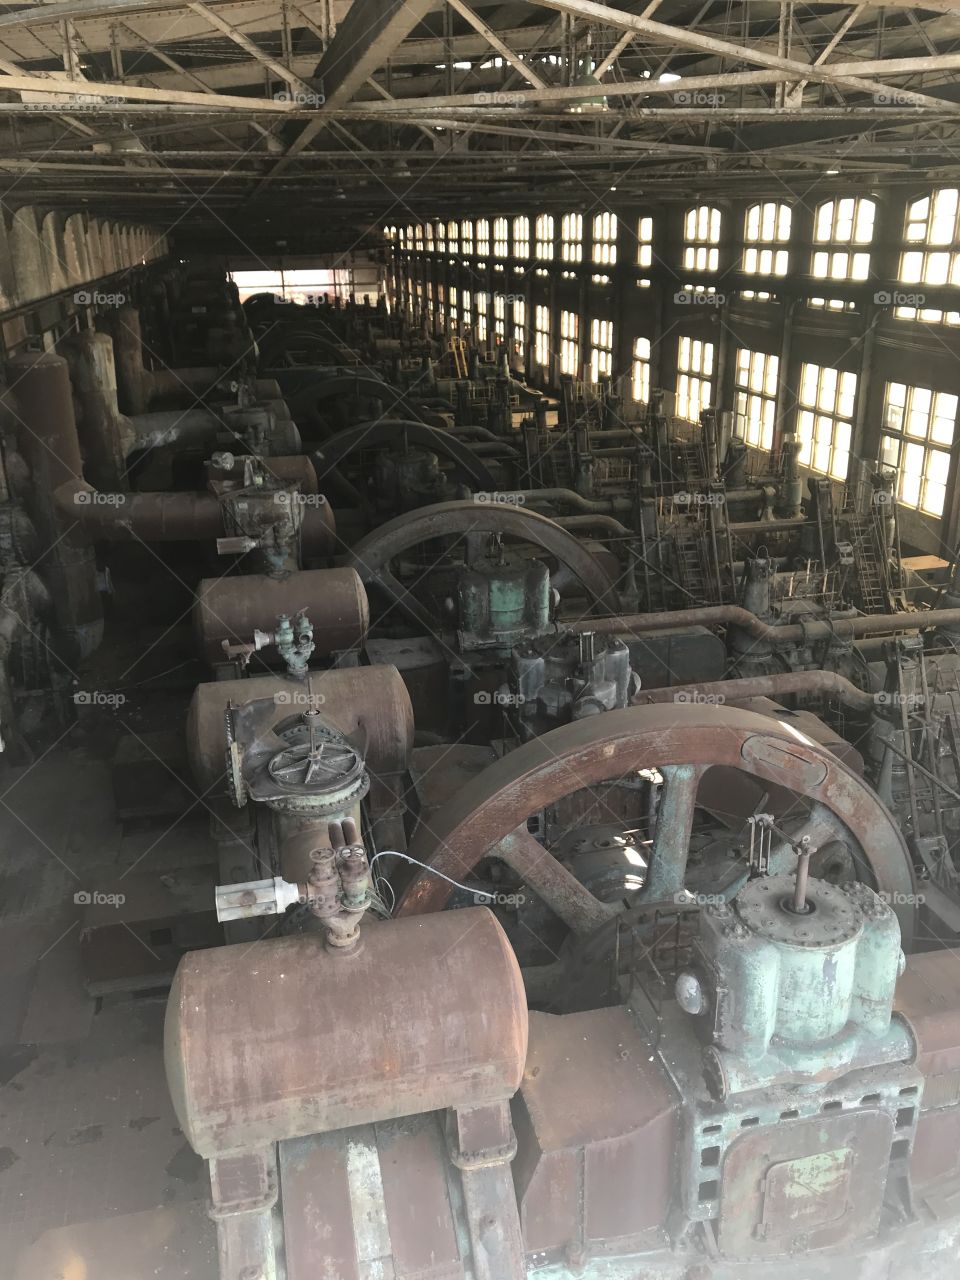 Bethlehem steel works generators